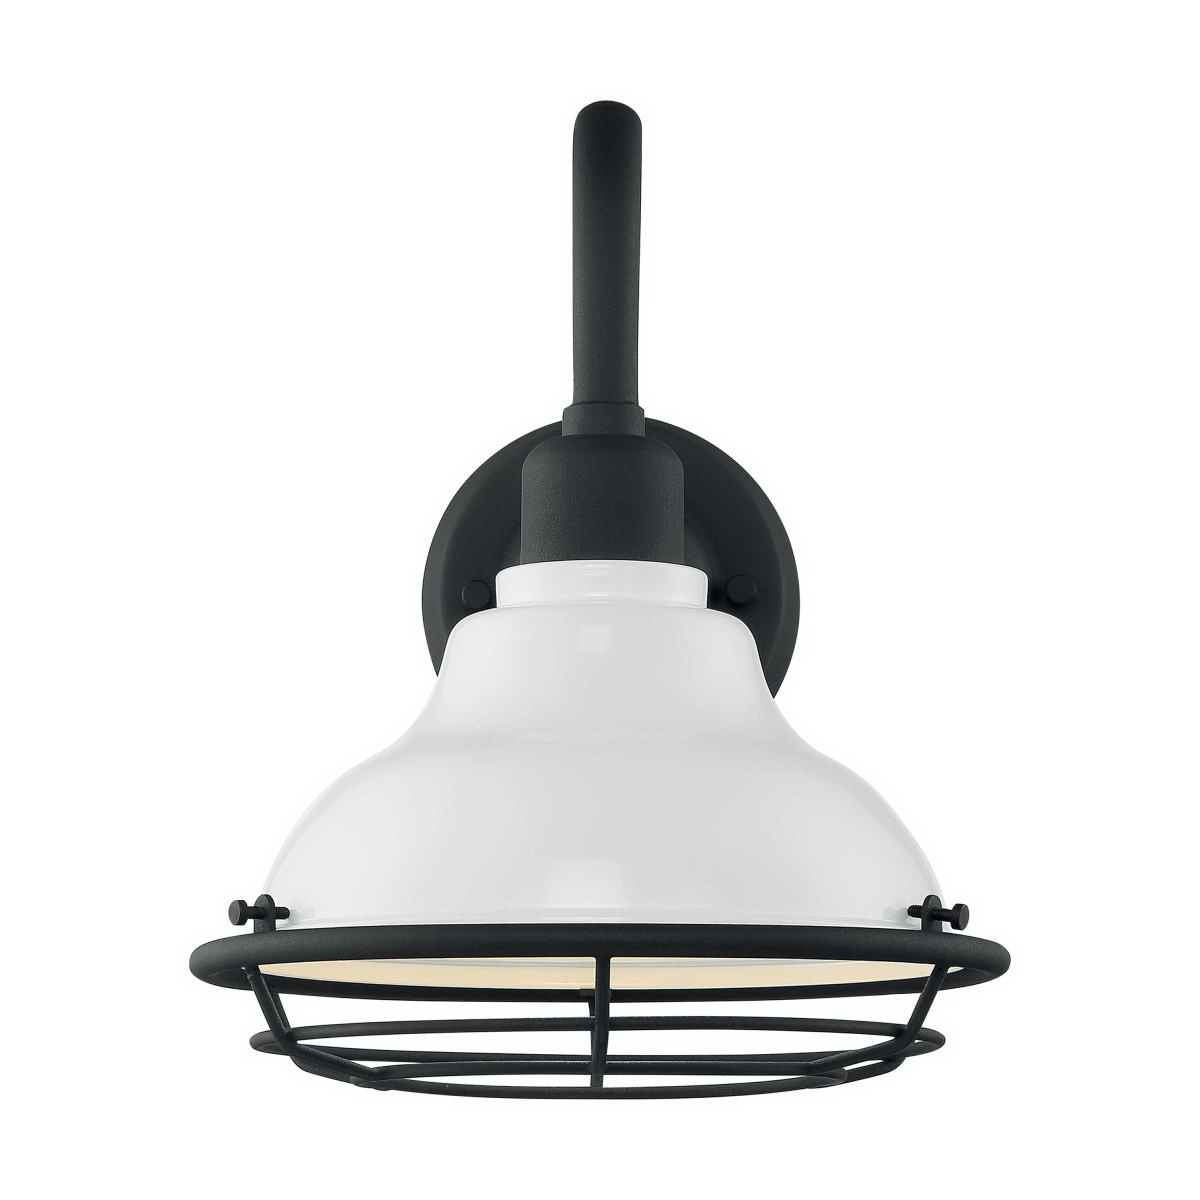 Satco Newbridge 60-7021 Sconce, 120 V, Incandescent Lamp, Steel Fixture, Gloss White/Textured Black Fixture - 2